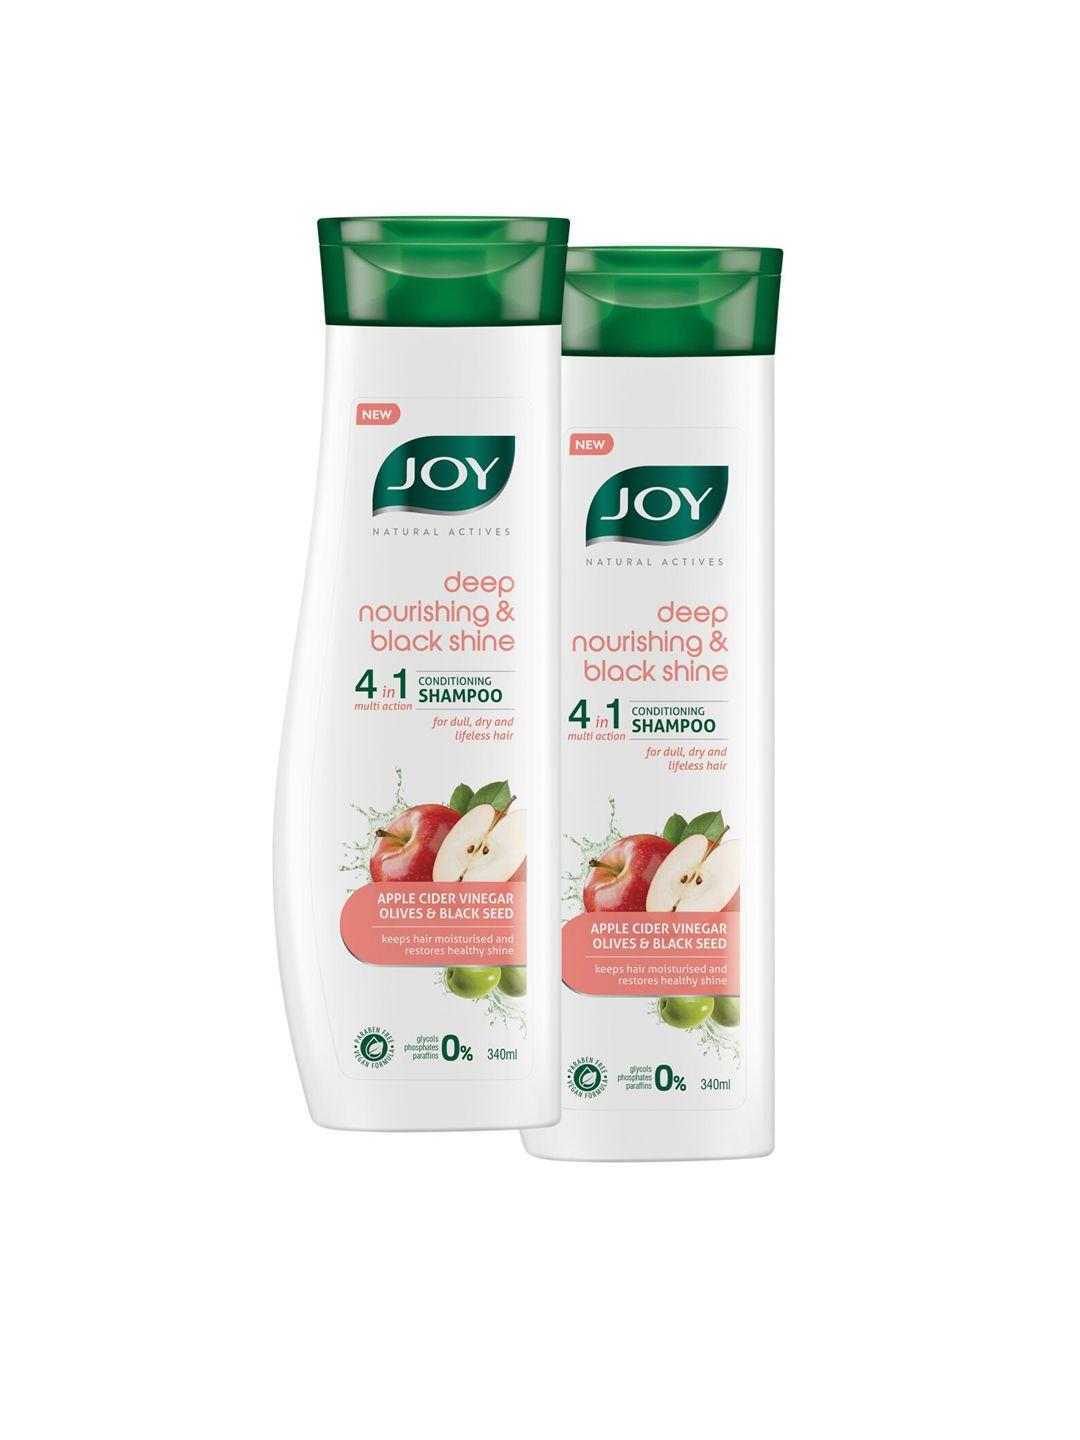 joy set of 2 natural actives deep nourishing & black shine 4-in-1 conditioning shampoo 340 ml each